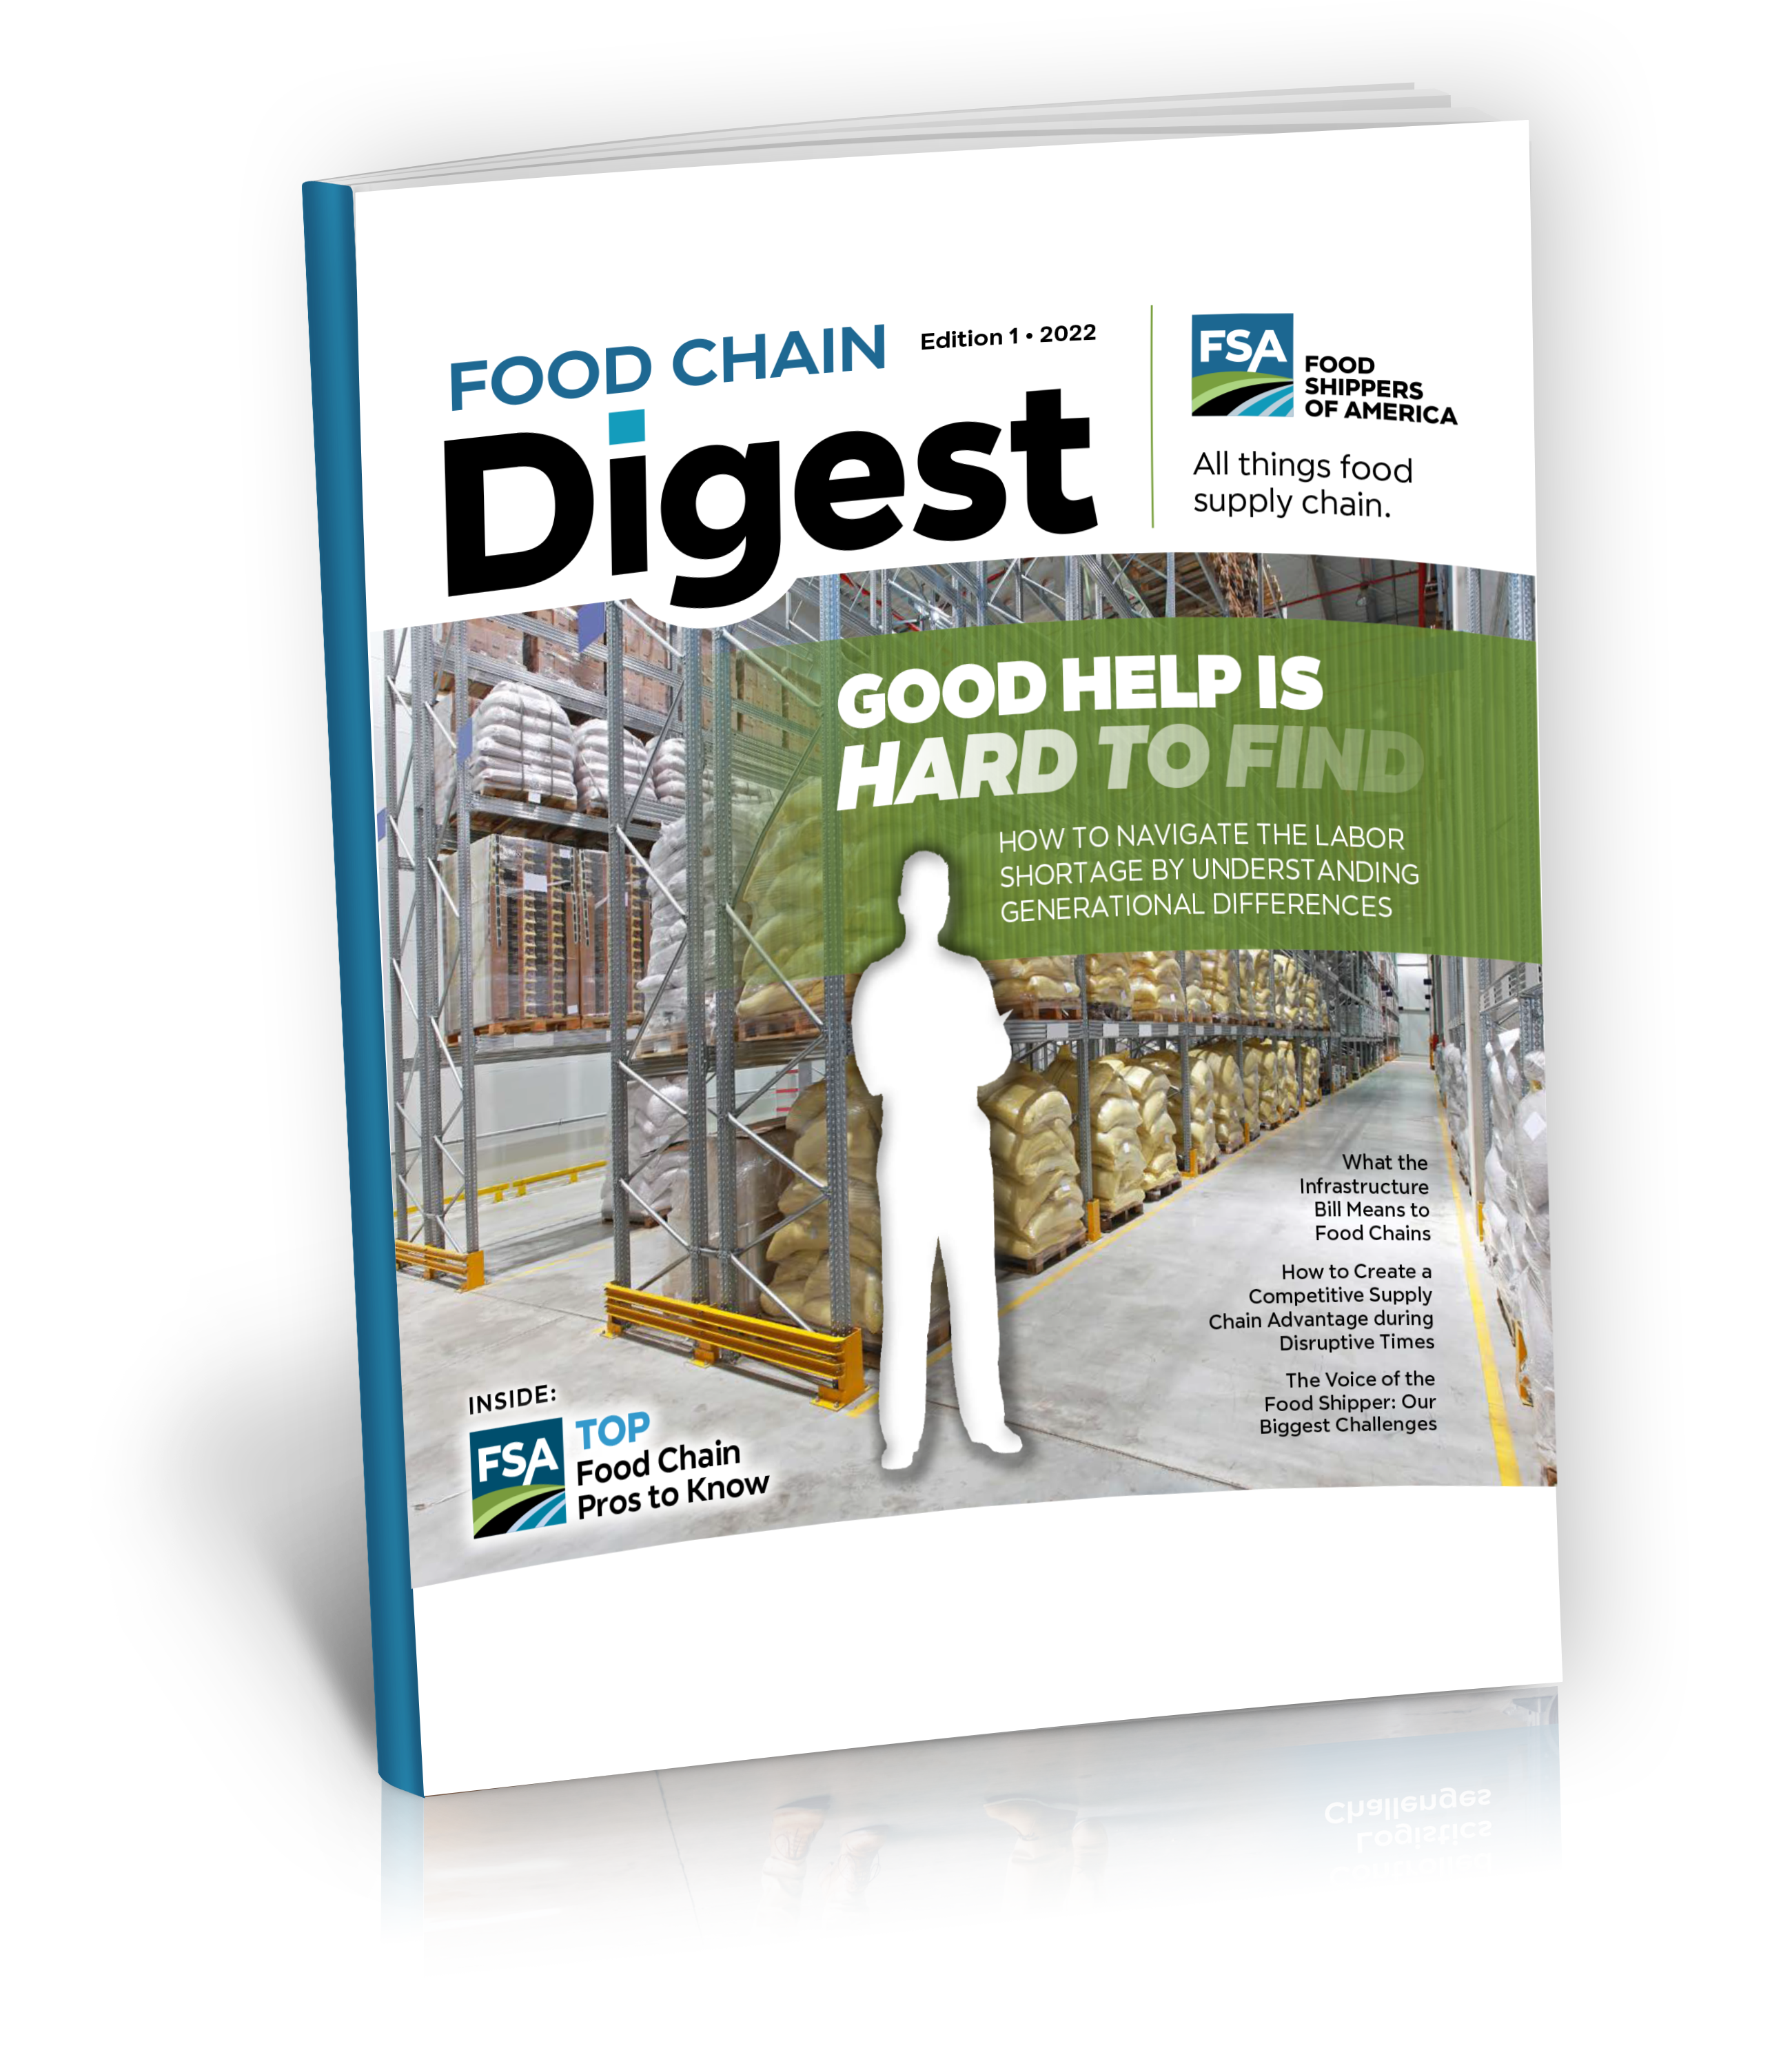 Food-Chain-Digest-Ed1-2022-v2